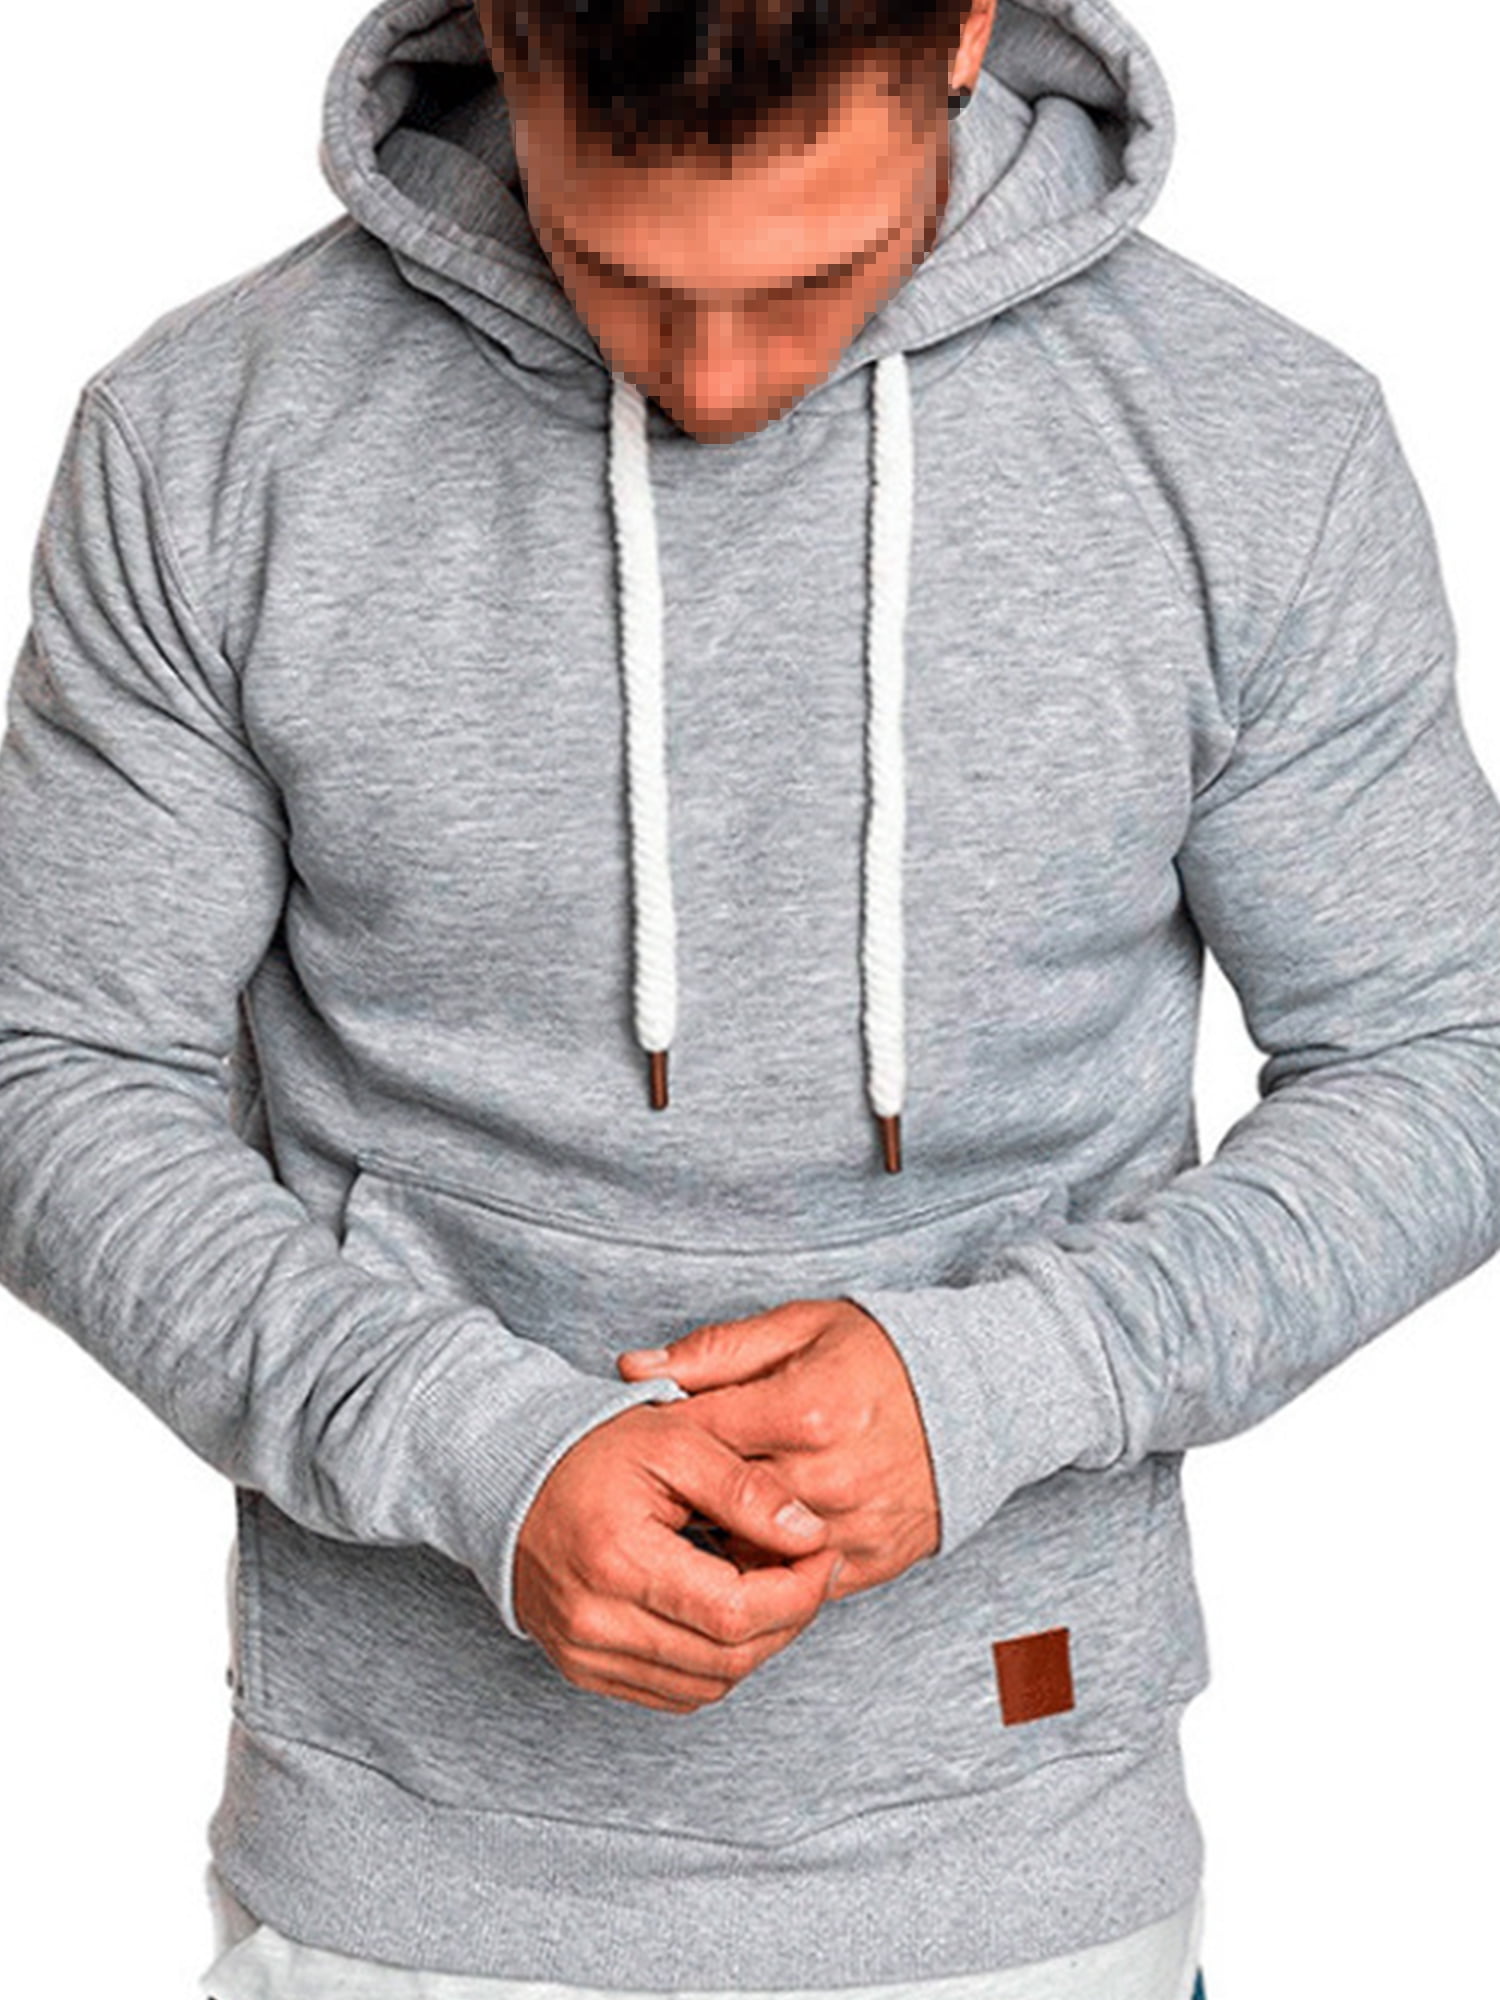 Details about   Mens Pullover Hoodies Long Sleeve Casual Sweatshirt Drawstring Warm Jumper Top 